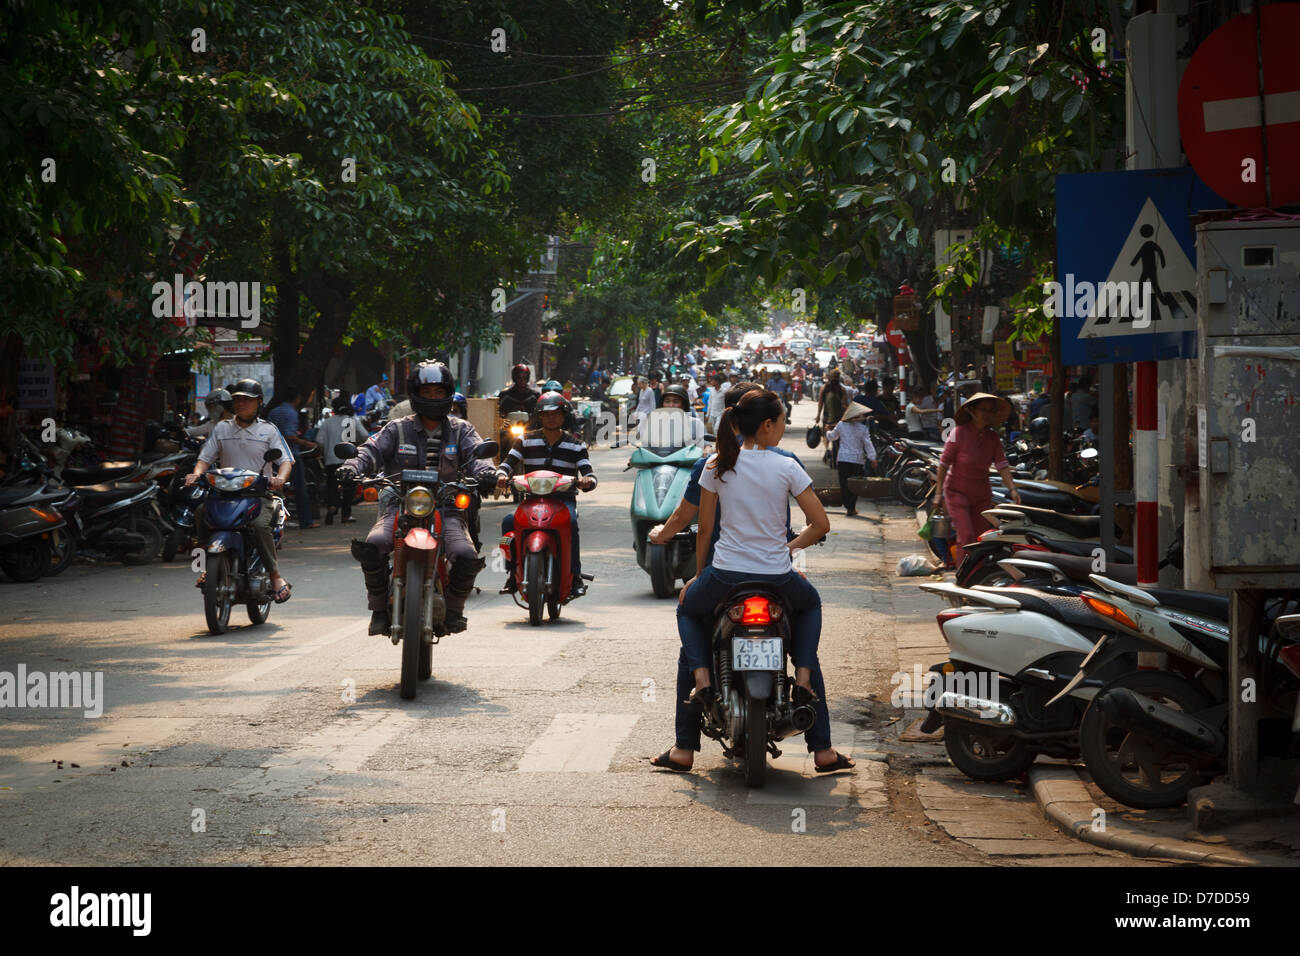 A street in the Old Quarter of Hanoi, Vietnam Stock Photo